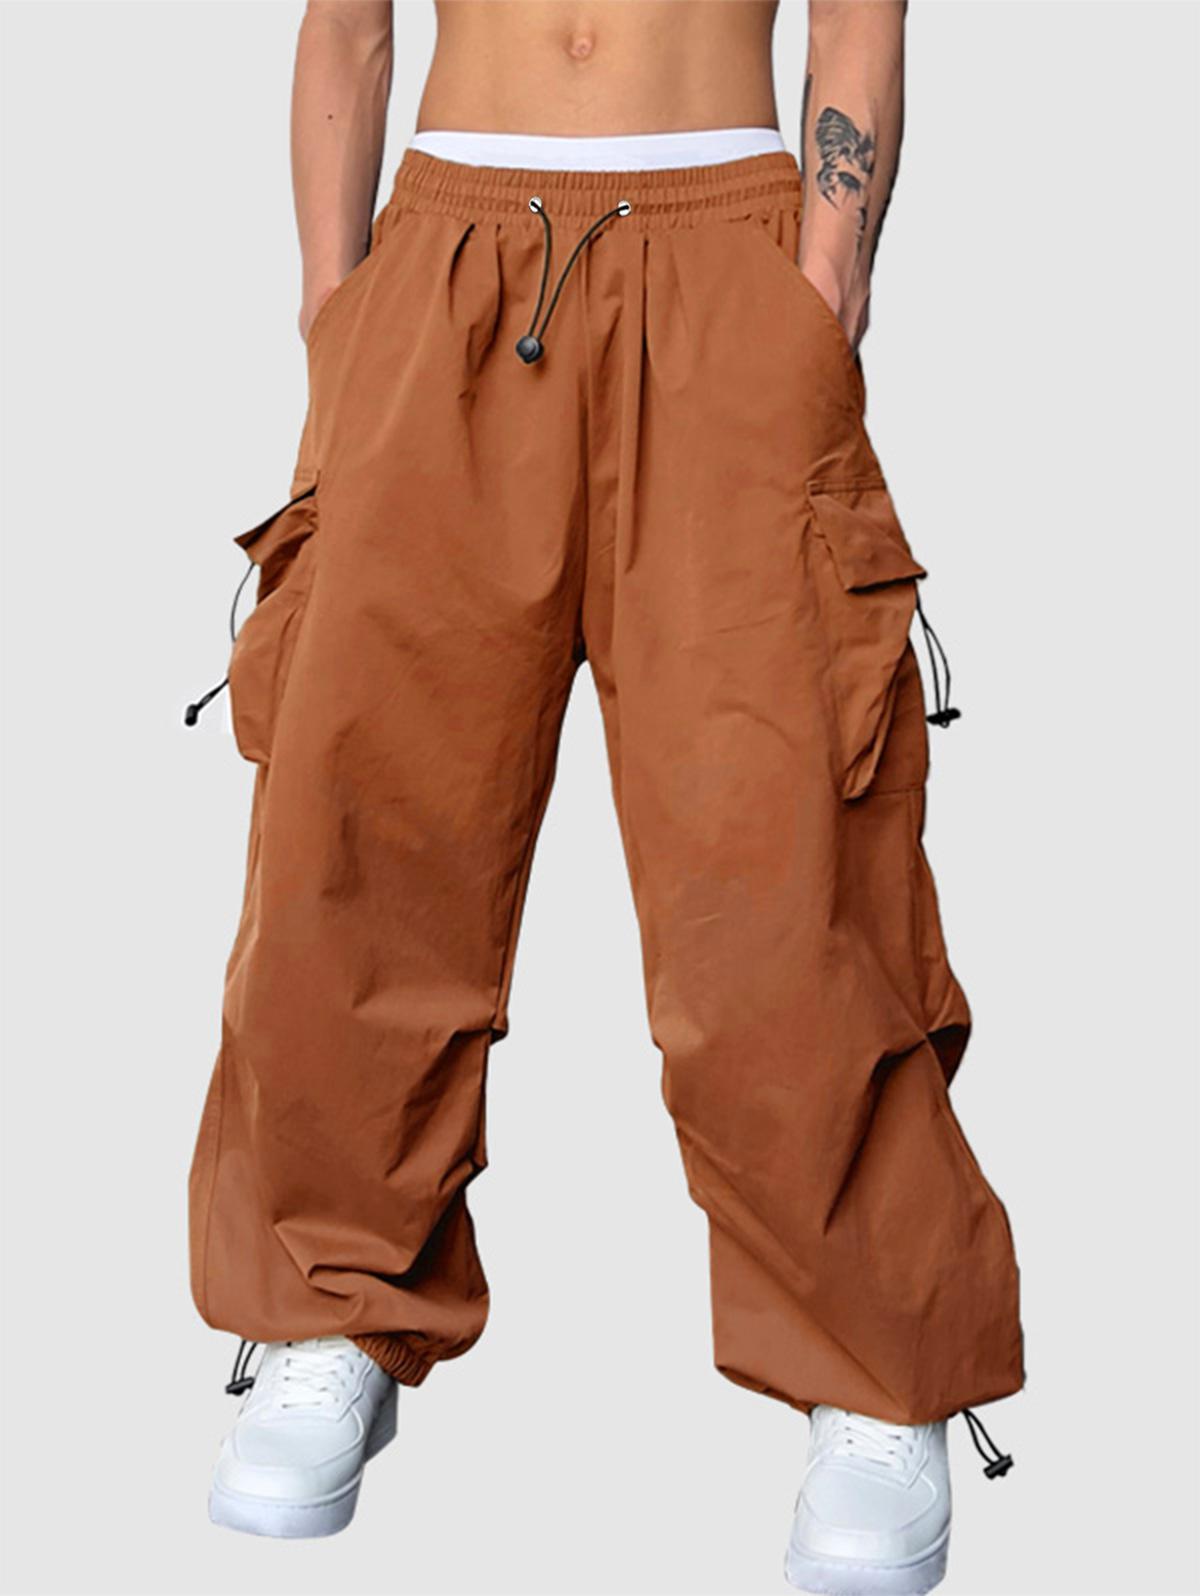 ZAFUL Men's ZAFUL Loose Fit Drawstring Pocket Design Beam Feet Parachute Cargo Pants S Orange - Gender: male